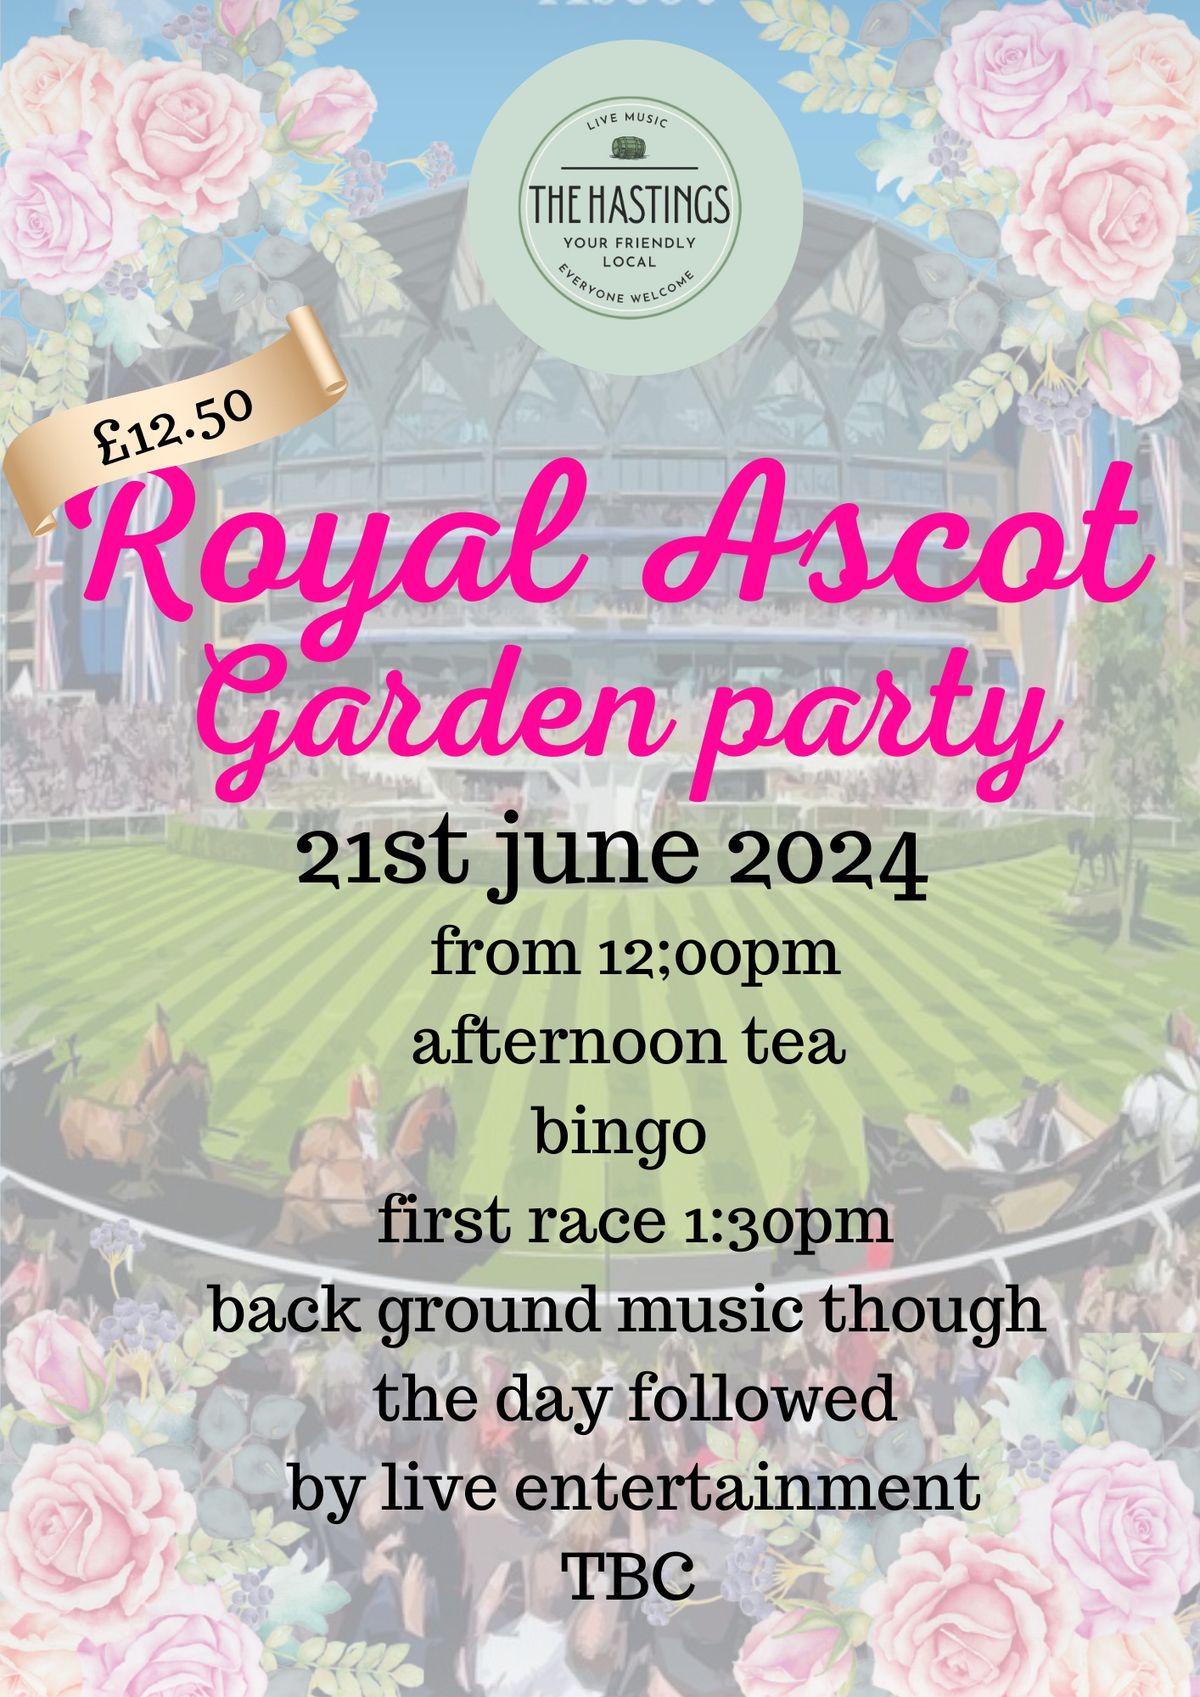 Royal ascot ladies day garden party 